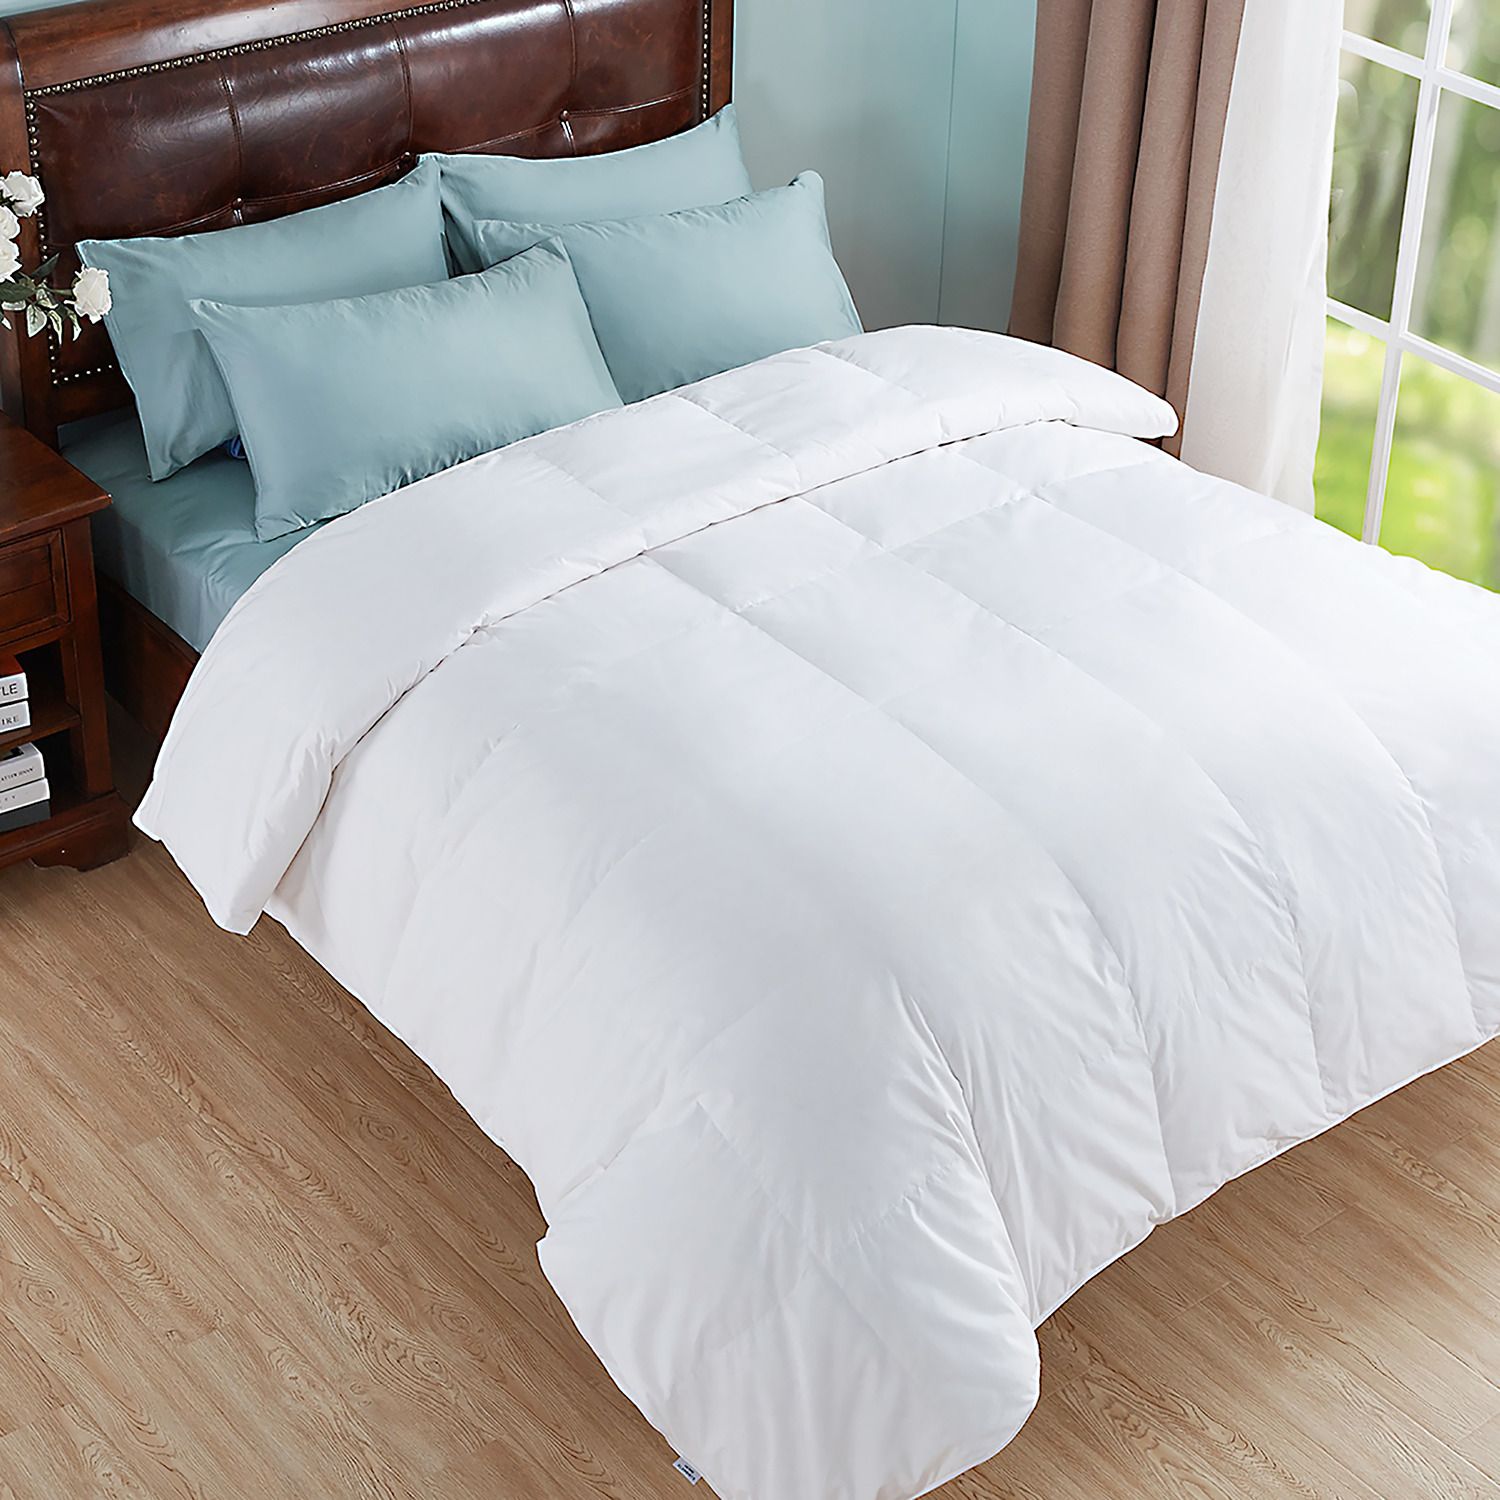 Image for Dream On All Season White Down Comforter at Kohl's.